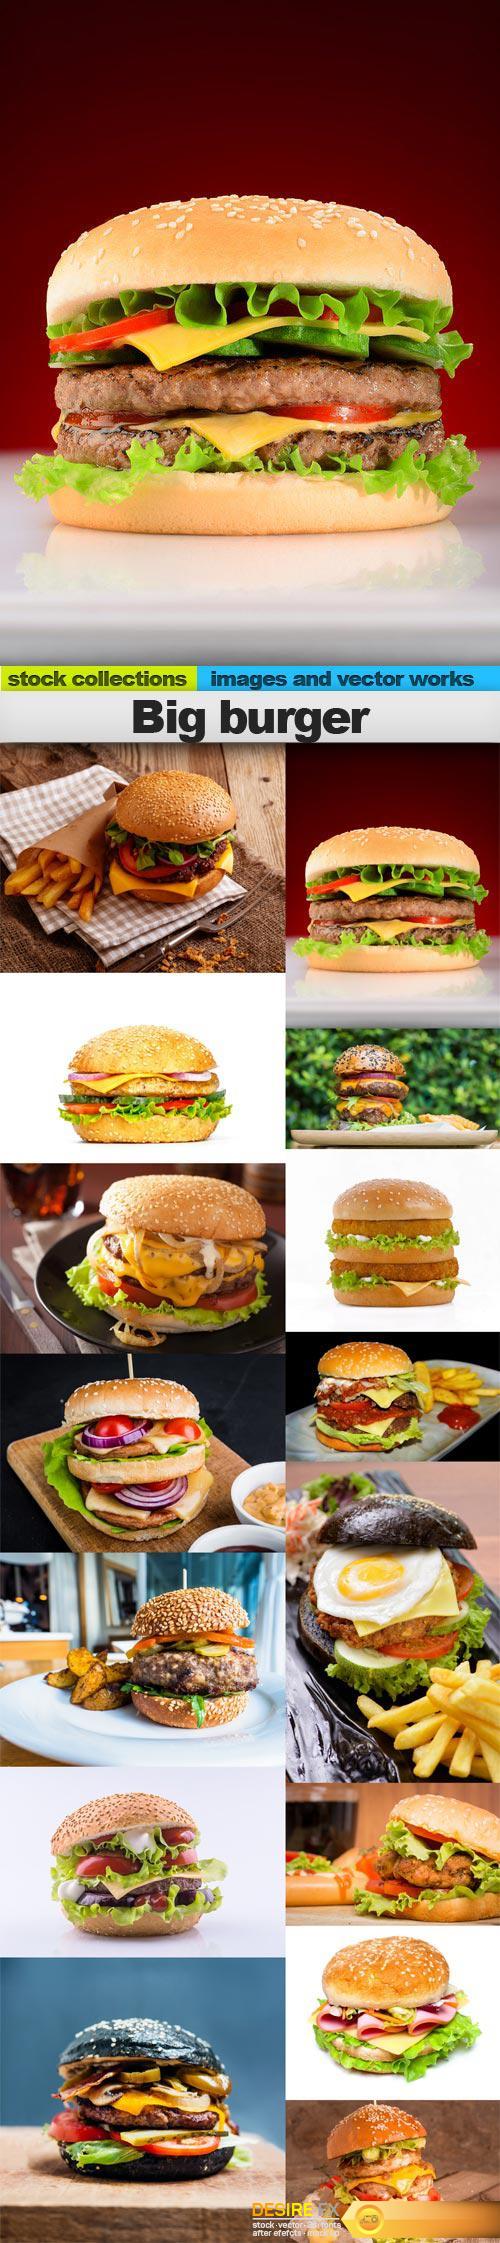 Big burger, 15 x UHQ JPEG